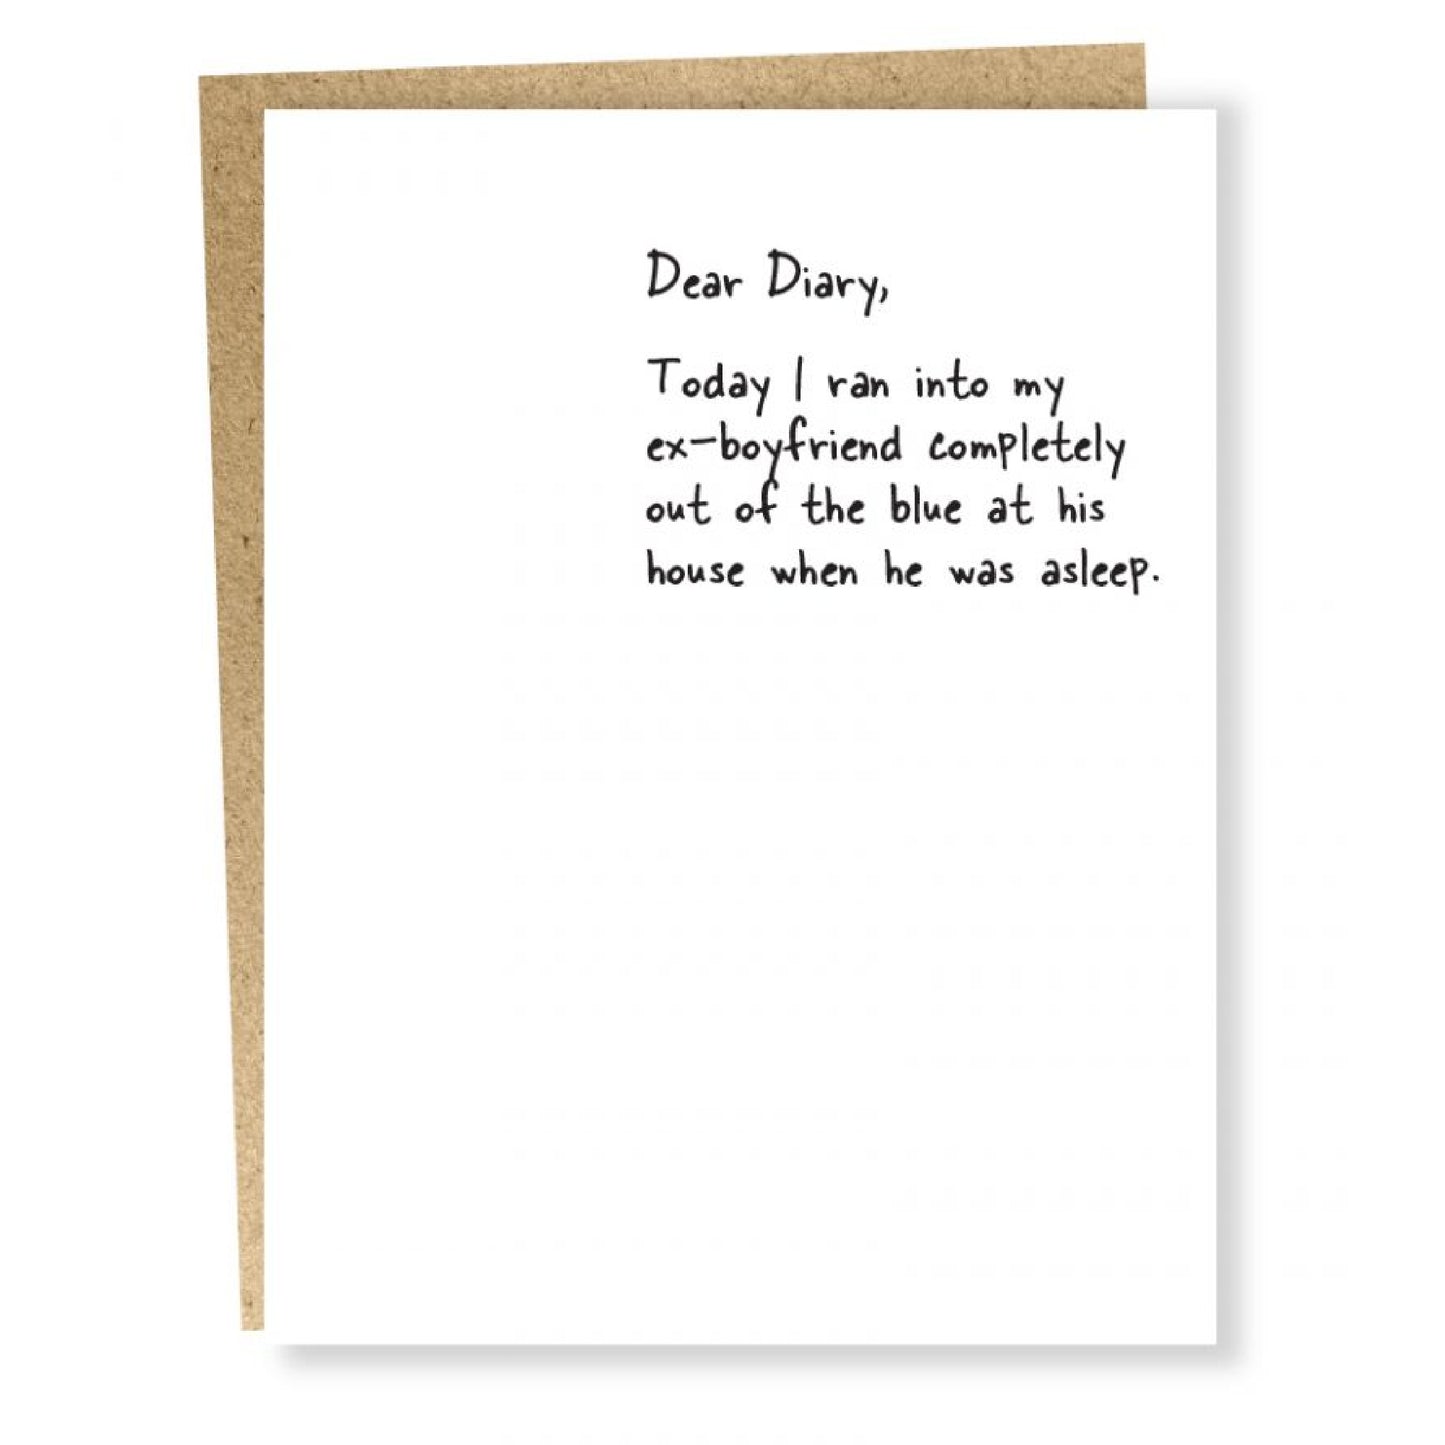 Dear Diary - Sapling Press Cards